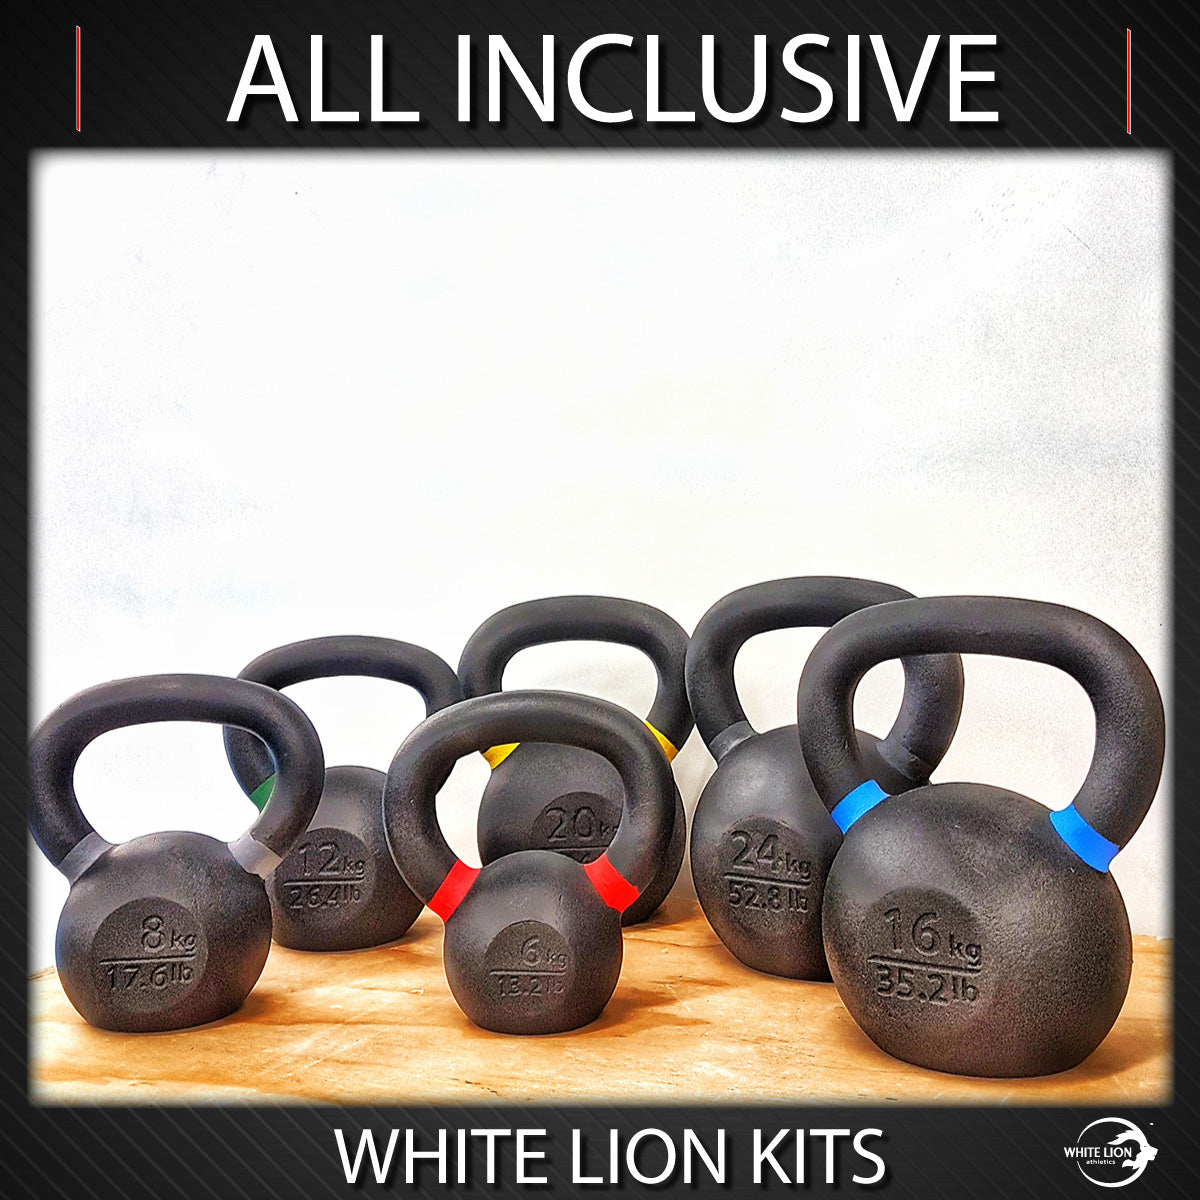 Kettlebell Package: "All Inclusive" (6kg/8kg/12kg/16kg/20kg/24kg) | In Stock Now - White Lion Athletics